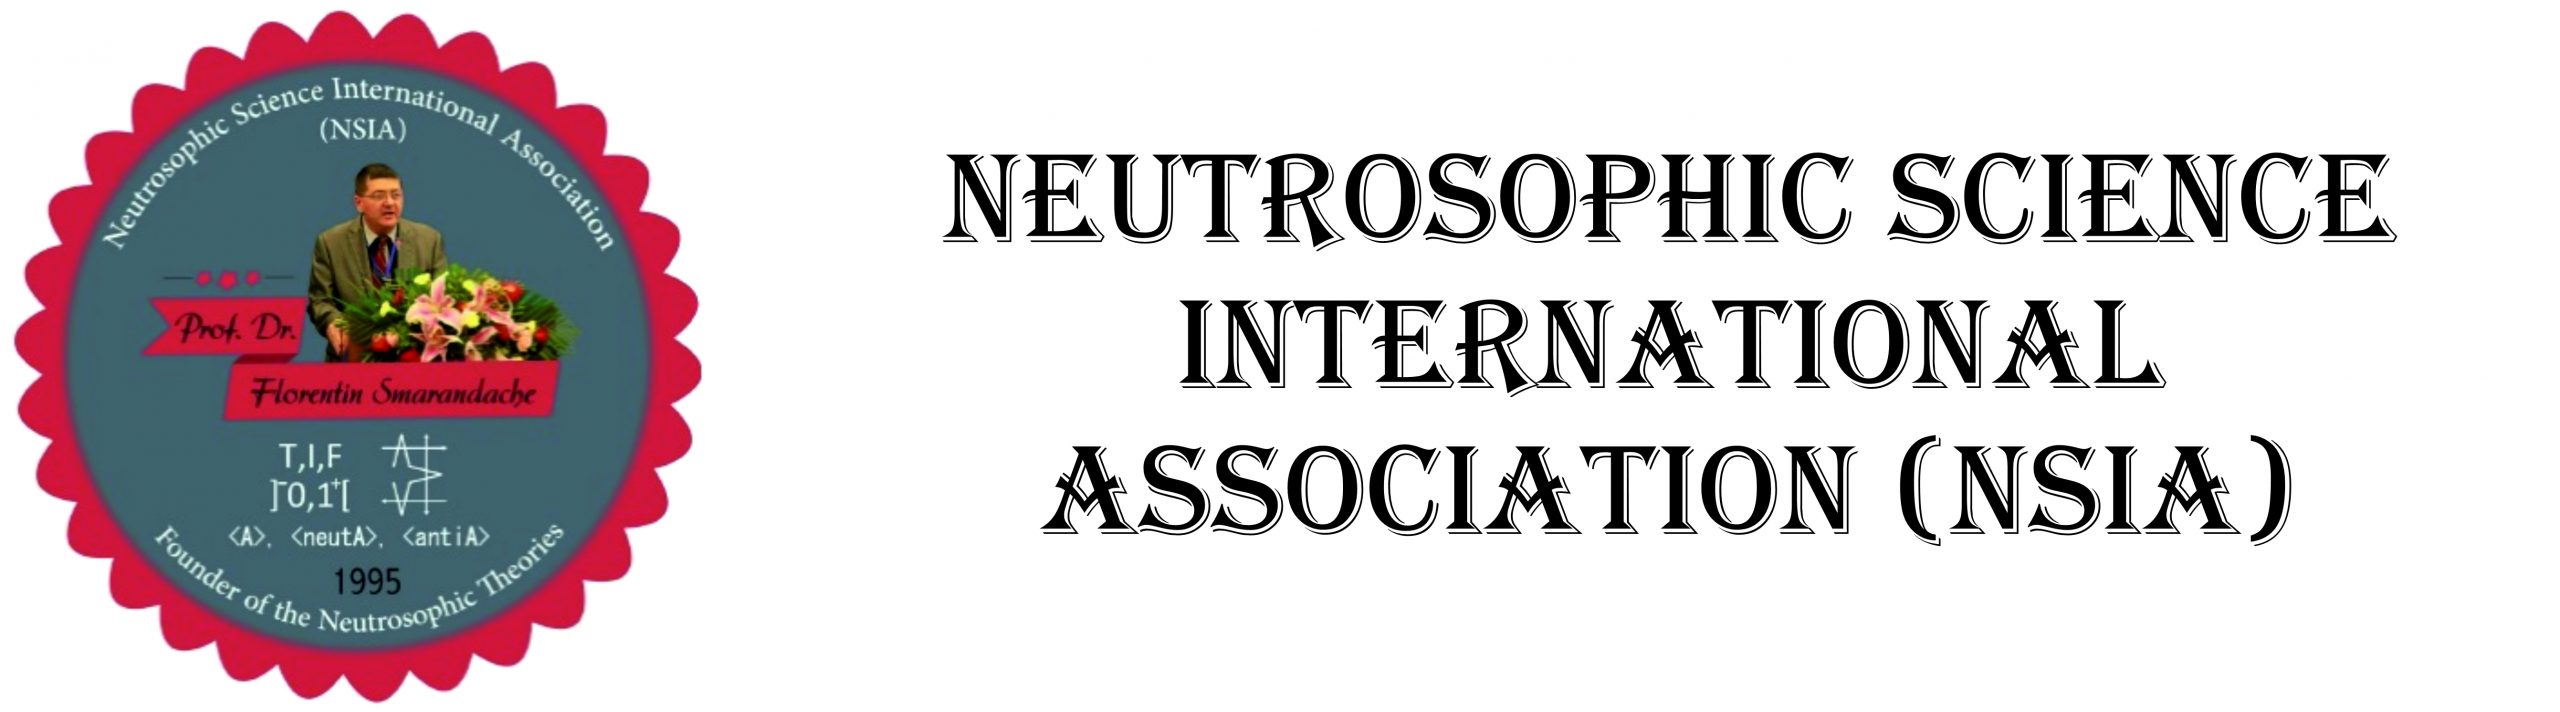 NEUTROSOPHIC ASSOCIATION NSIA